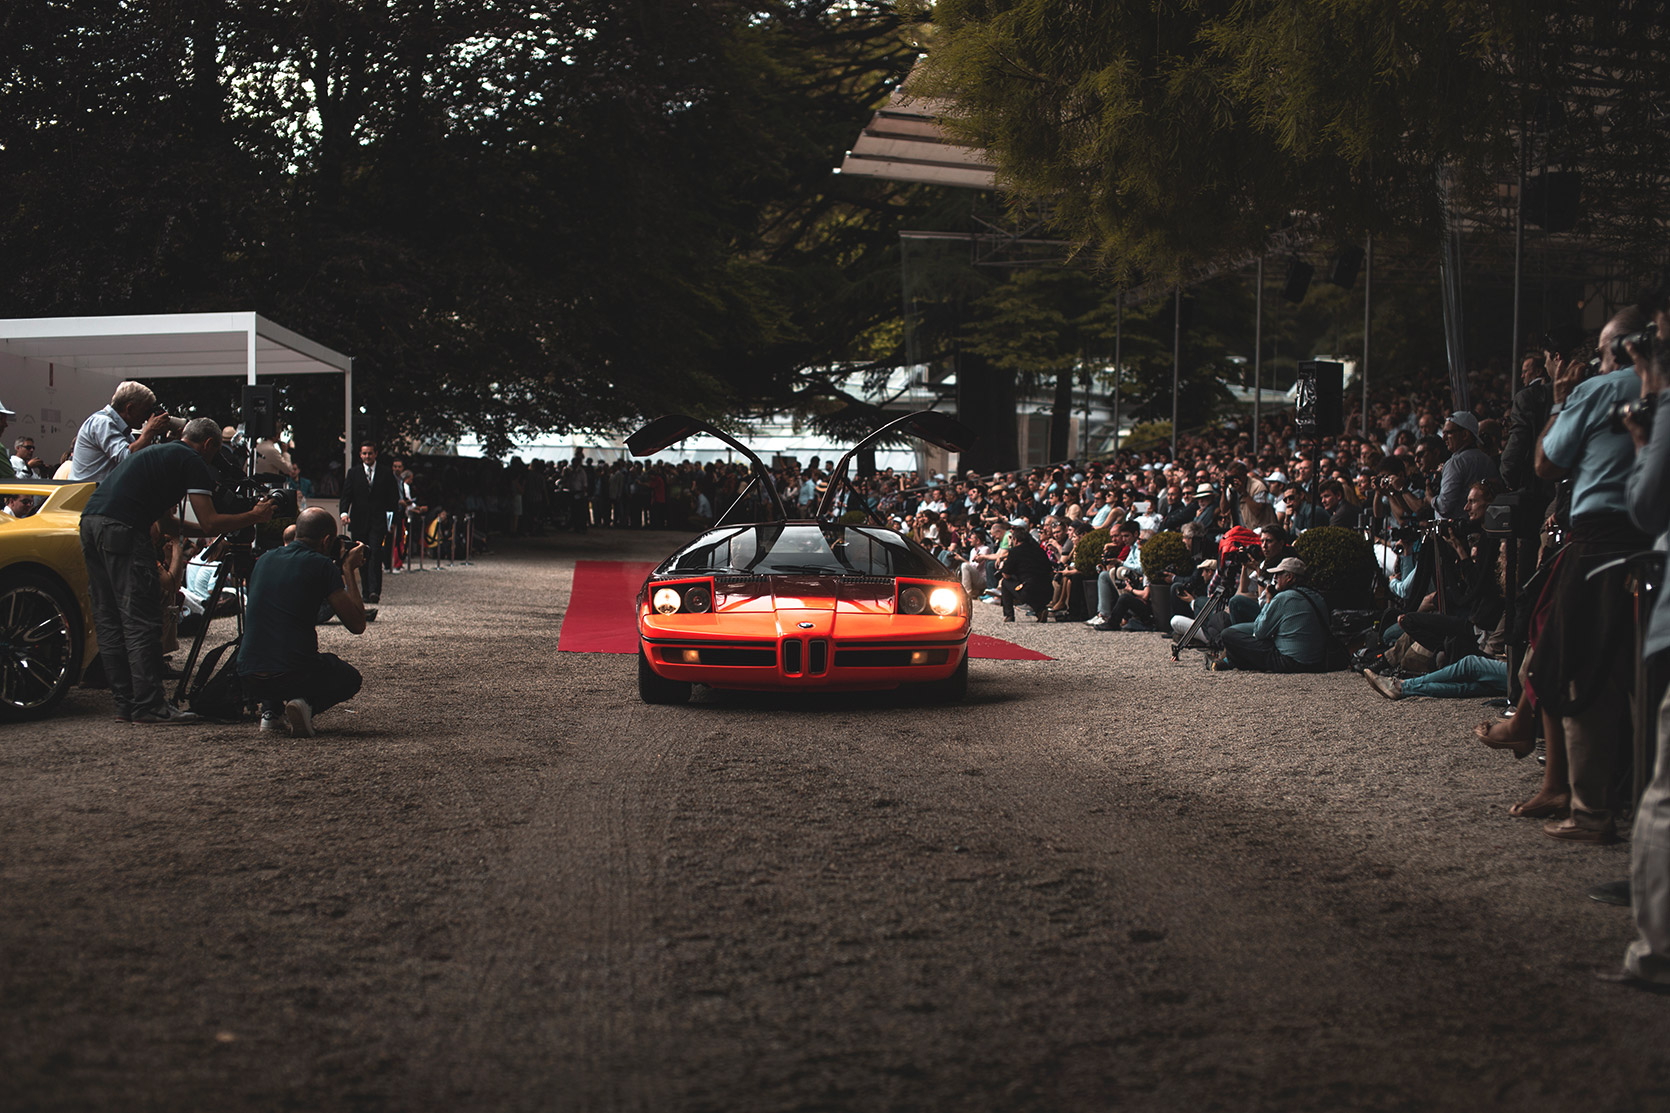 A BMW M1 left the red carpet parade at Concorso d'Eleganza Villa d'Este in Cernobbio